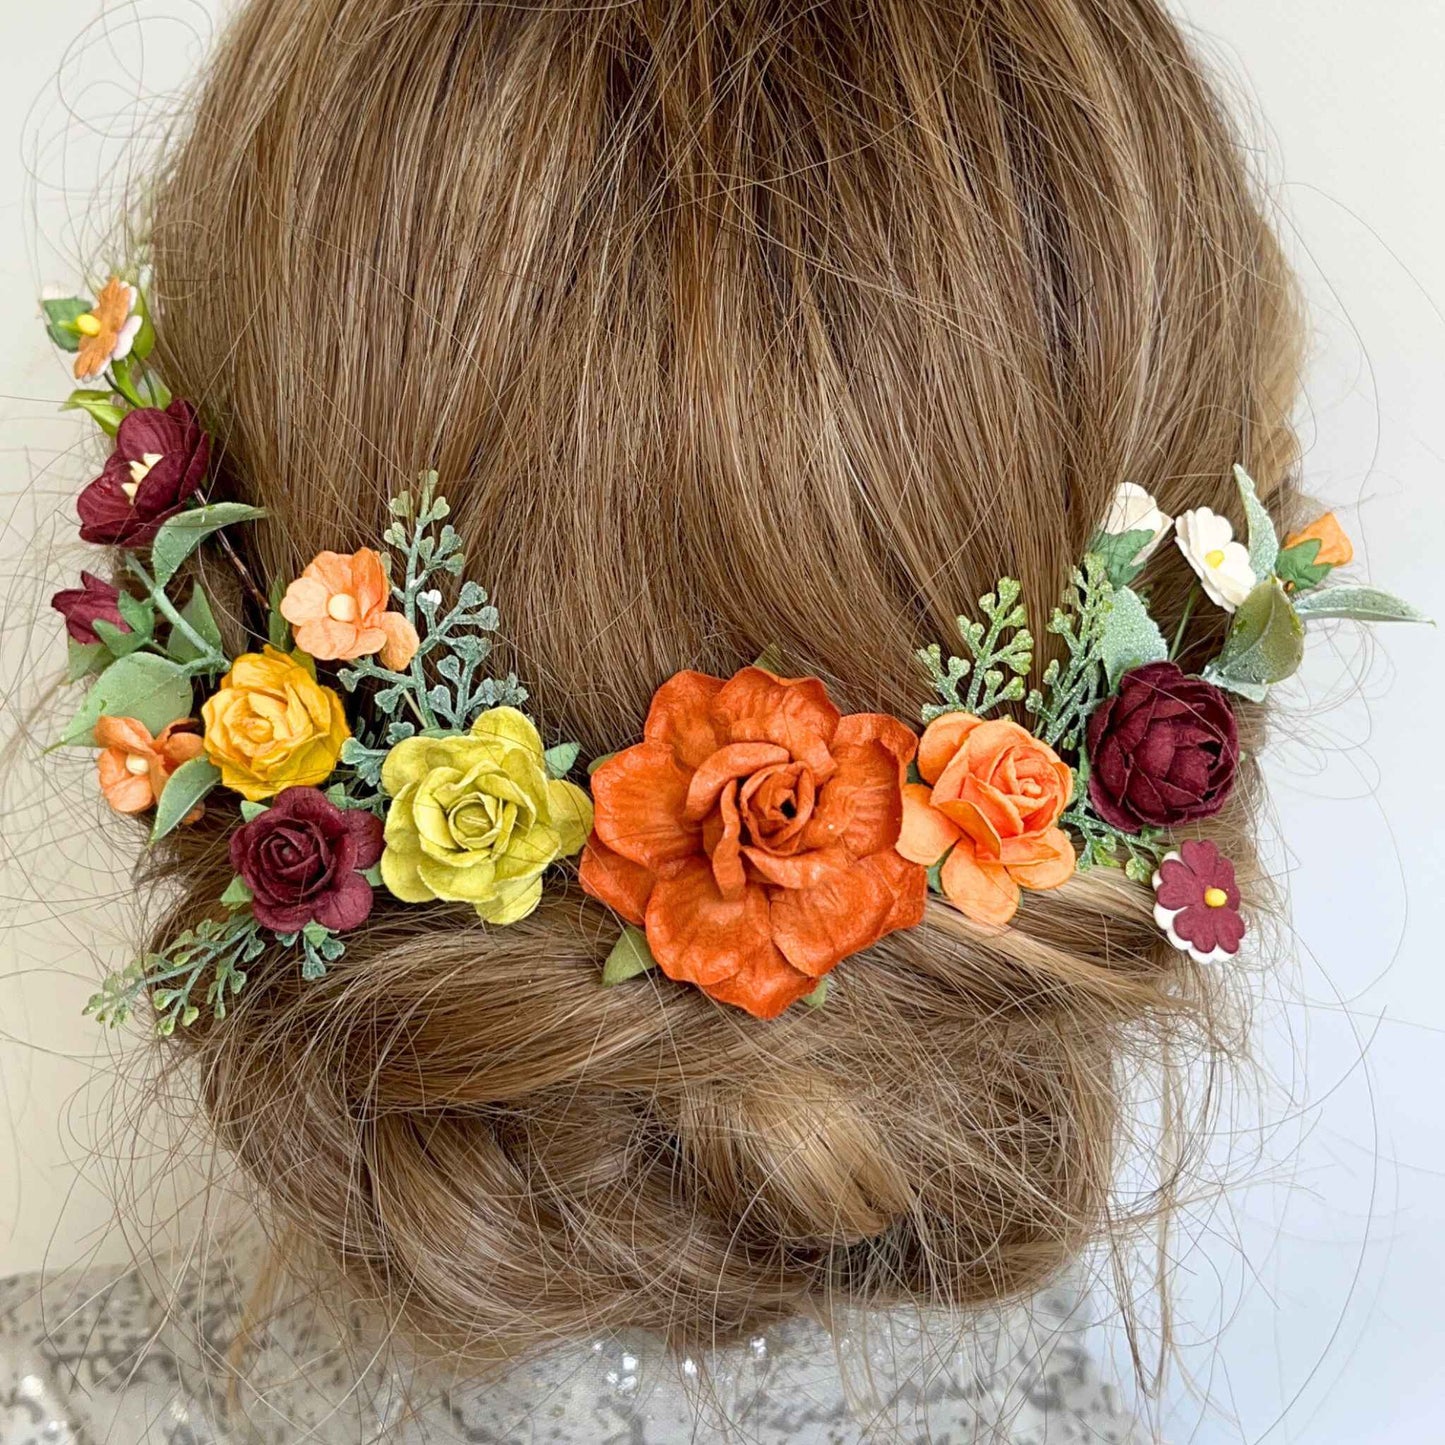 Flower Hair Pins Burgundy and White Bridal Hair Pieces Wedding Hair Clips Flower Set 22